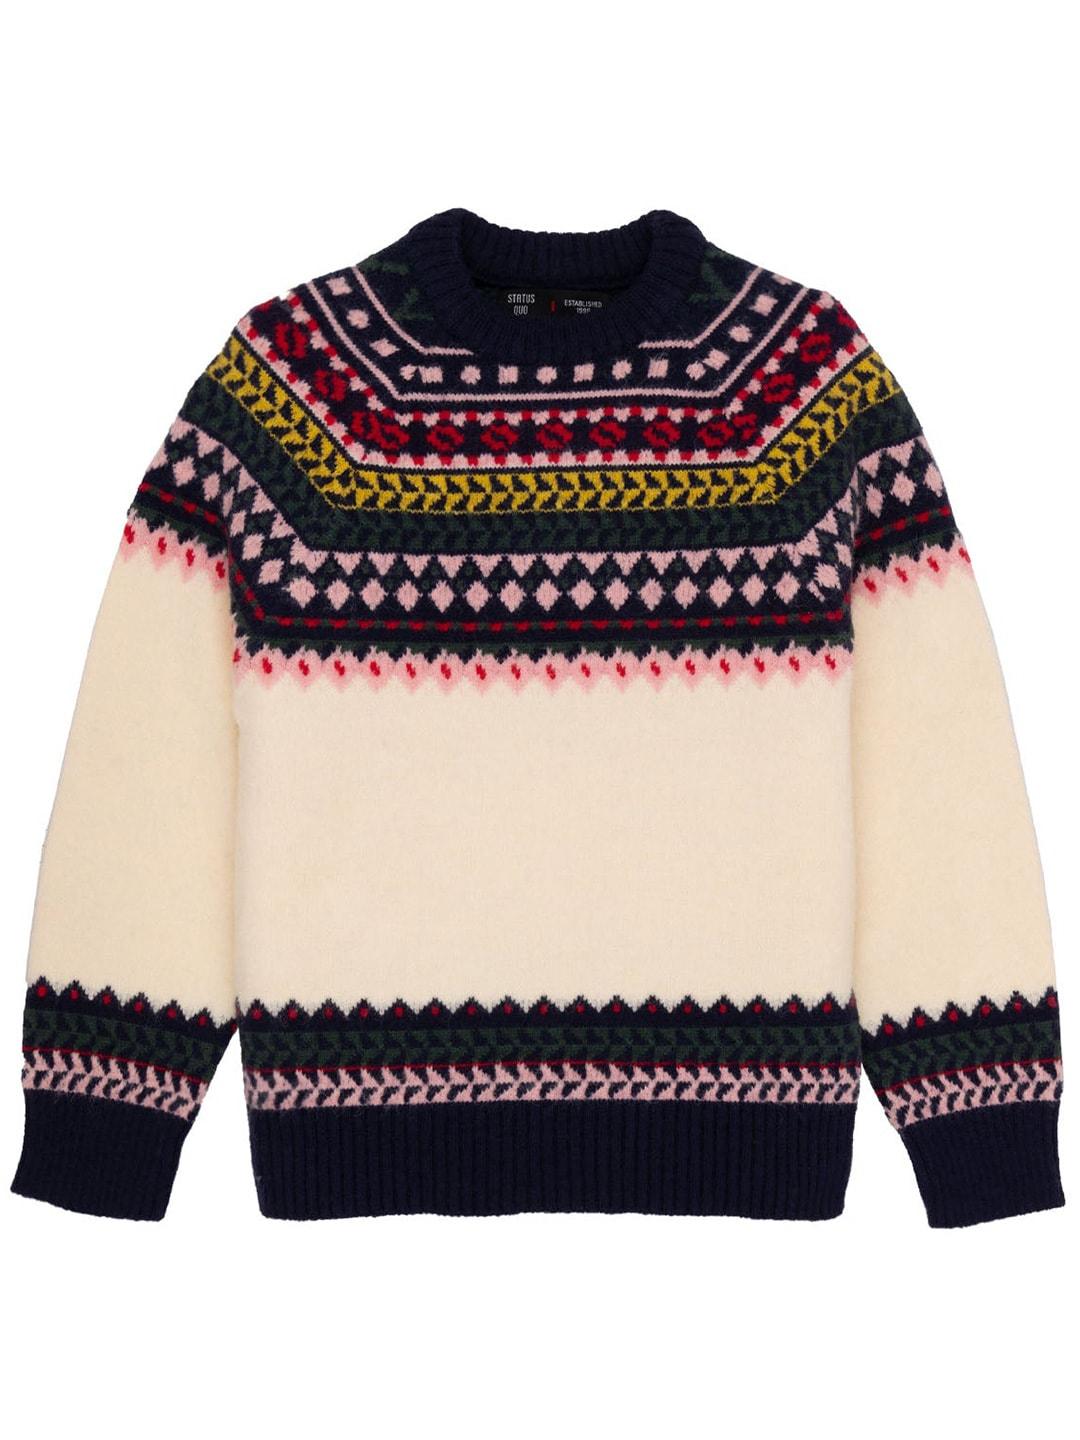 status quo boys argyle printed acrylic pullover sweater